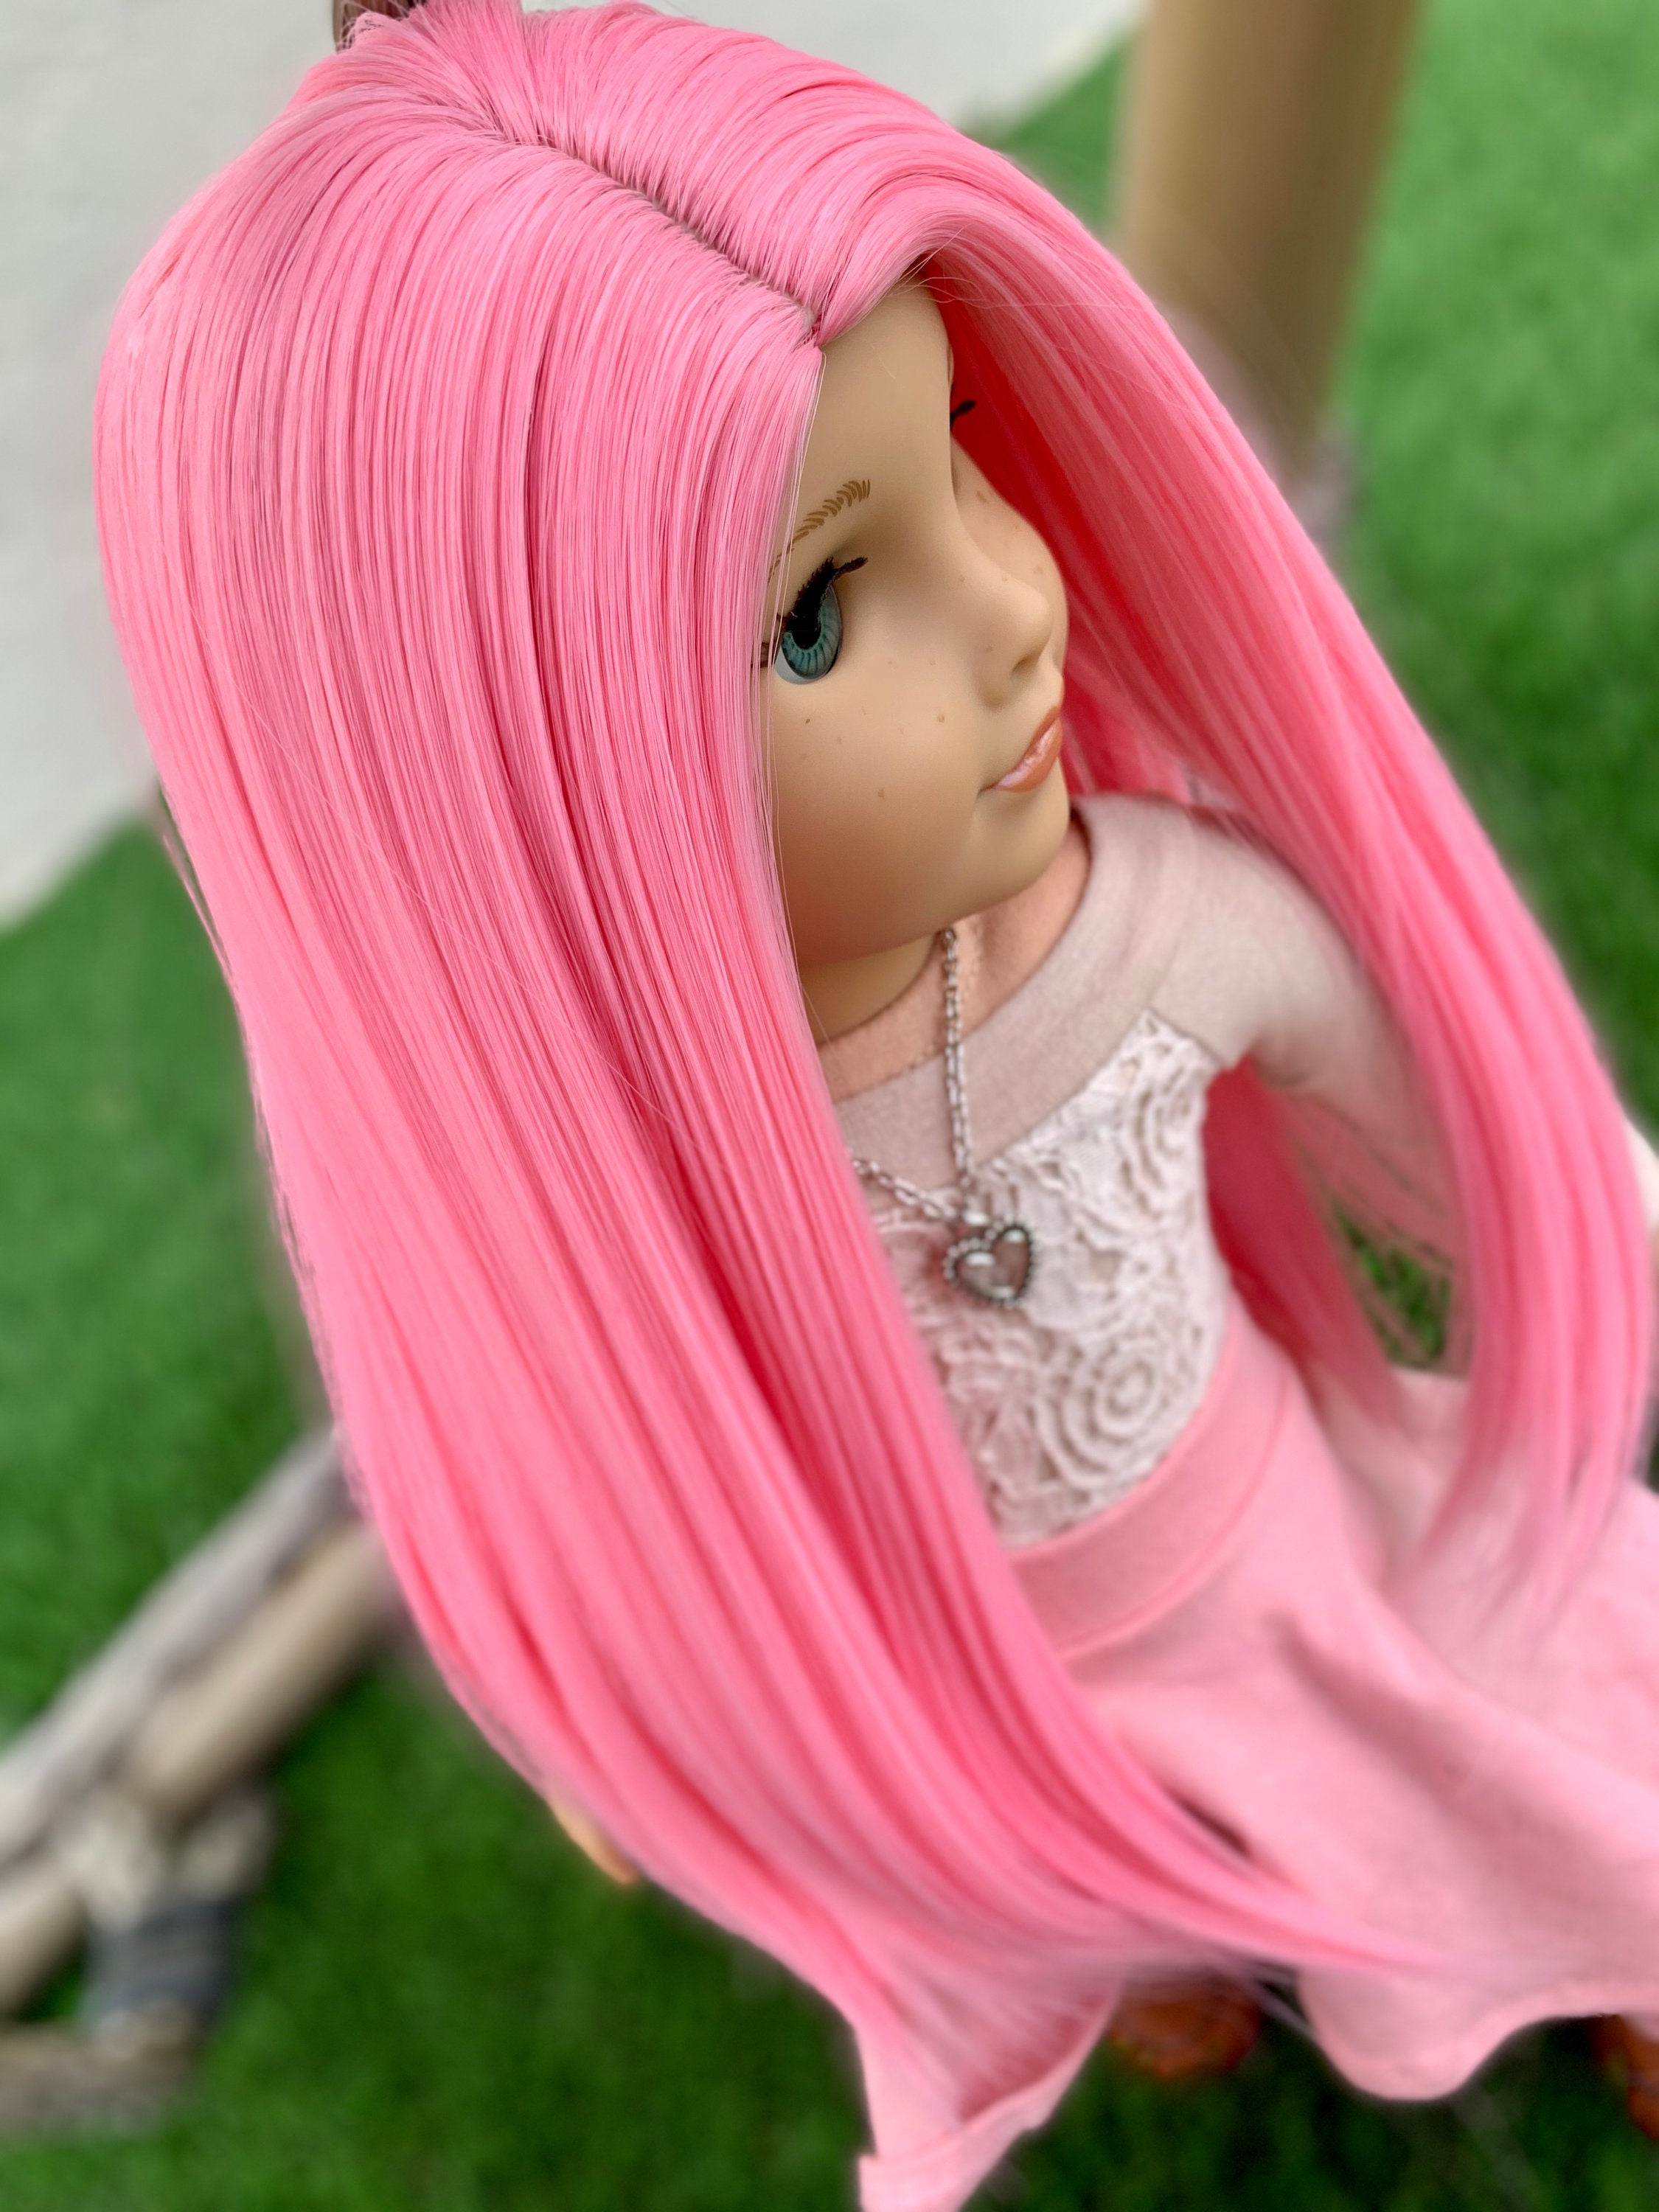 Custom doll wig for 18" American Girl Dolls - Heat Safe - Tangle Resistant - fits 10-11" head size of 18" dolls  Blythe BJD Gotz  pink